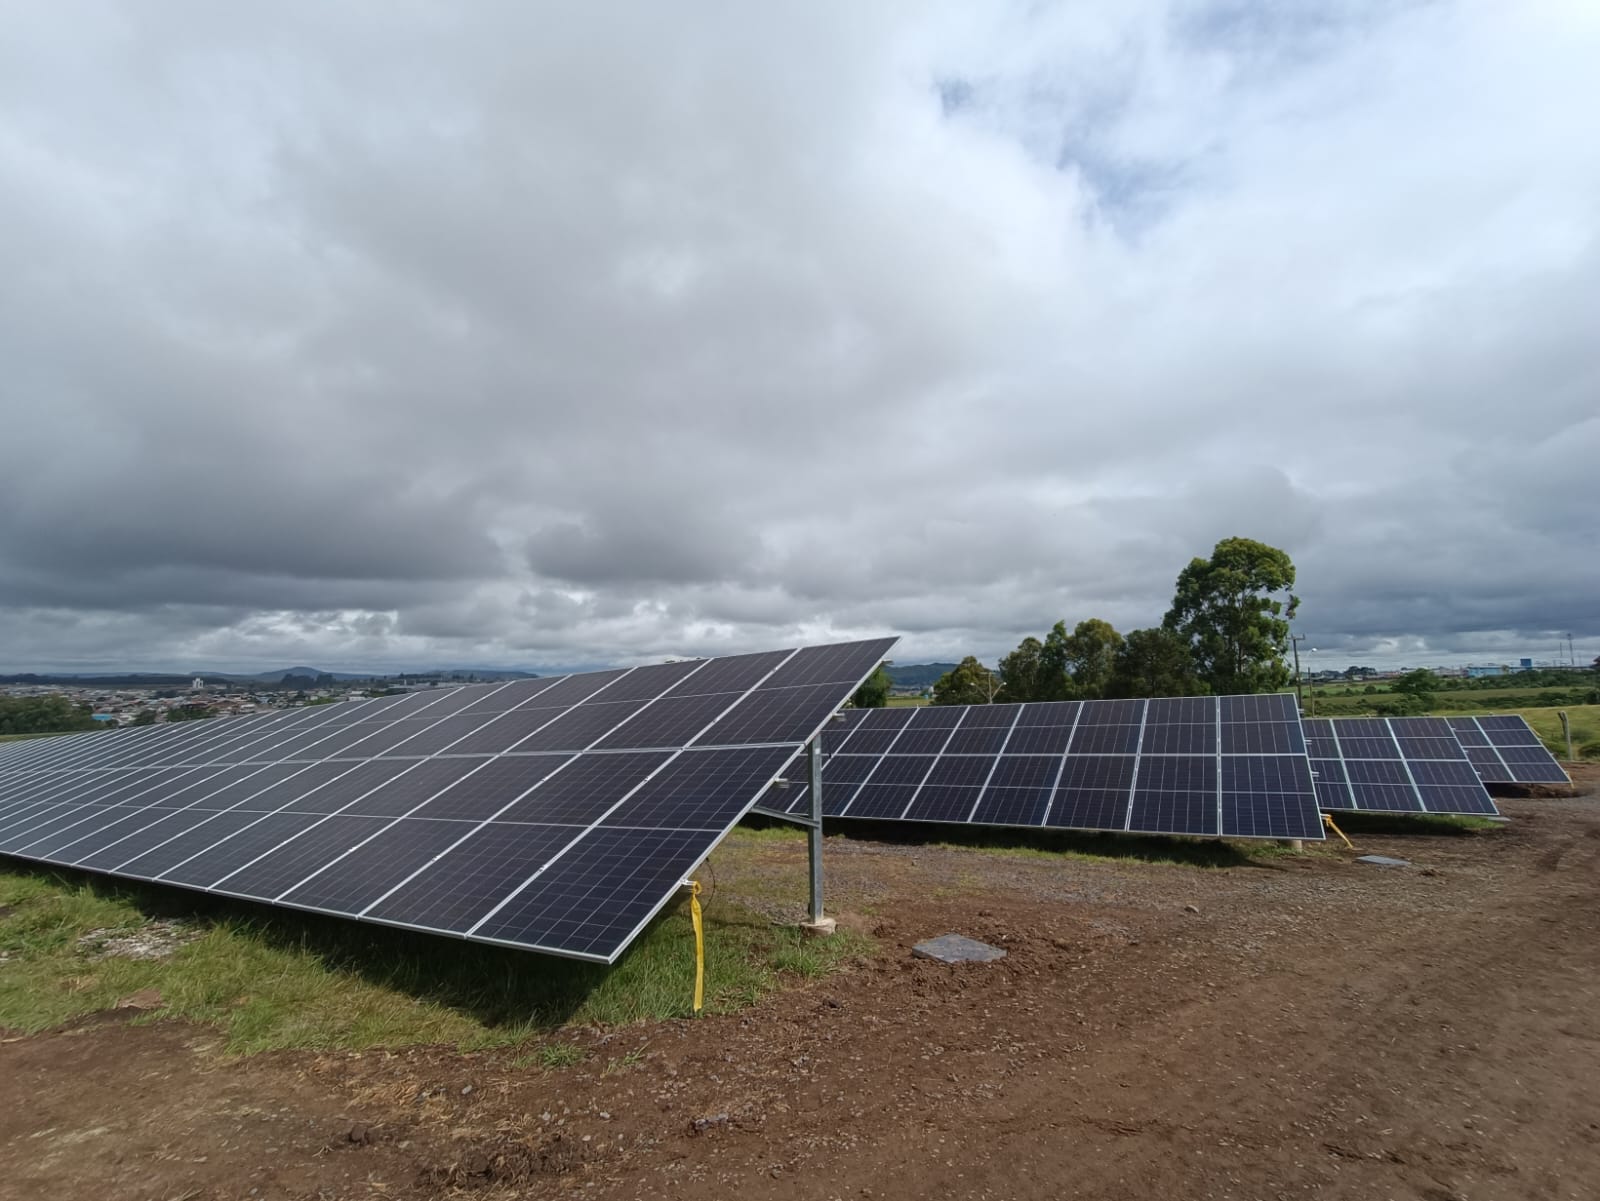 Celesc realiza entrega técnica da Usina Solar Lages I